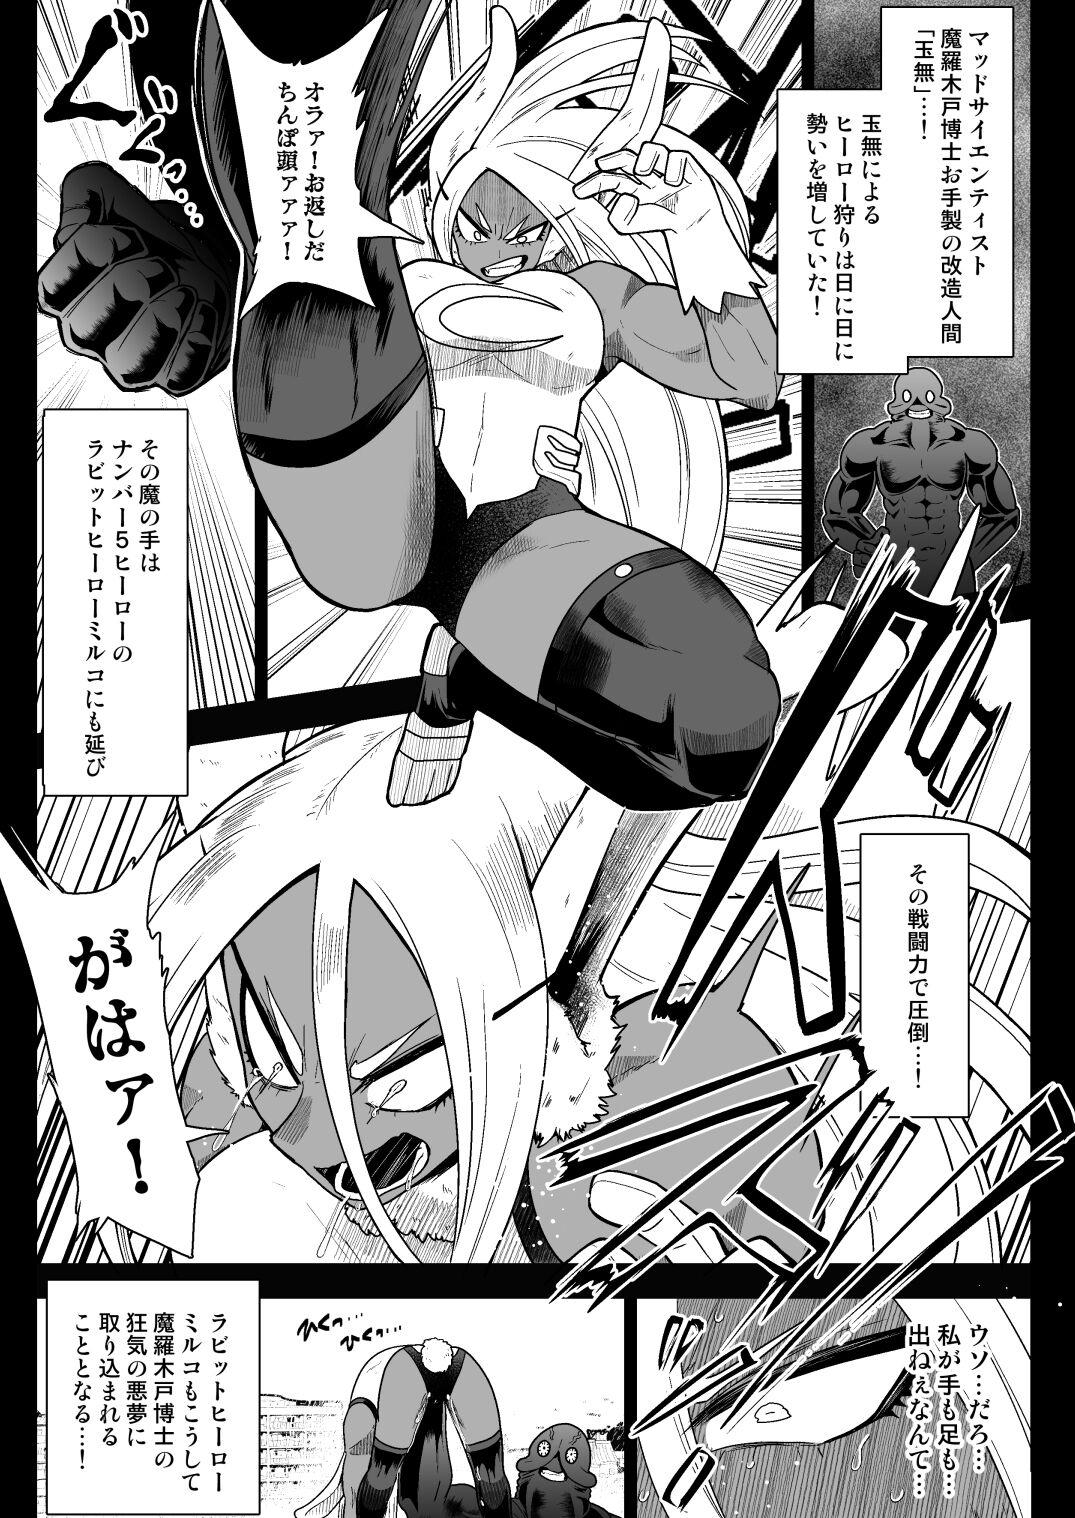 Exposed Ra*t Hero Mirko VS Android Tamanashi - My hero academia | boku no hero academia 18yo - Page 4